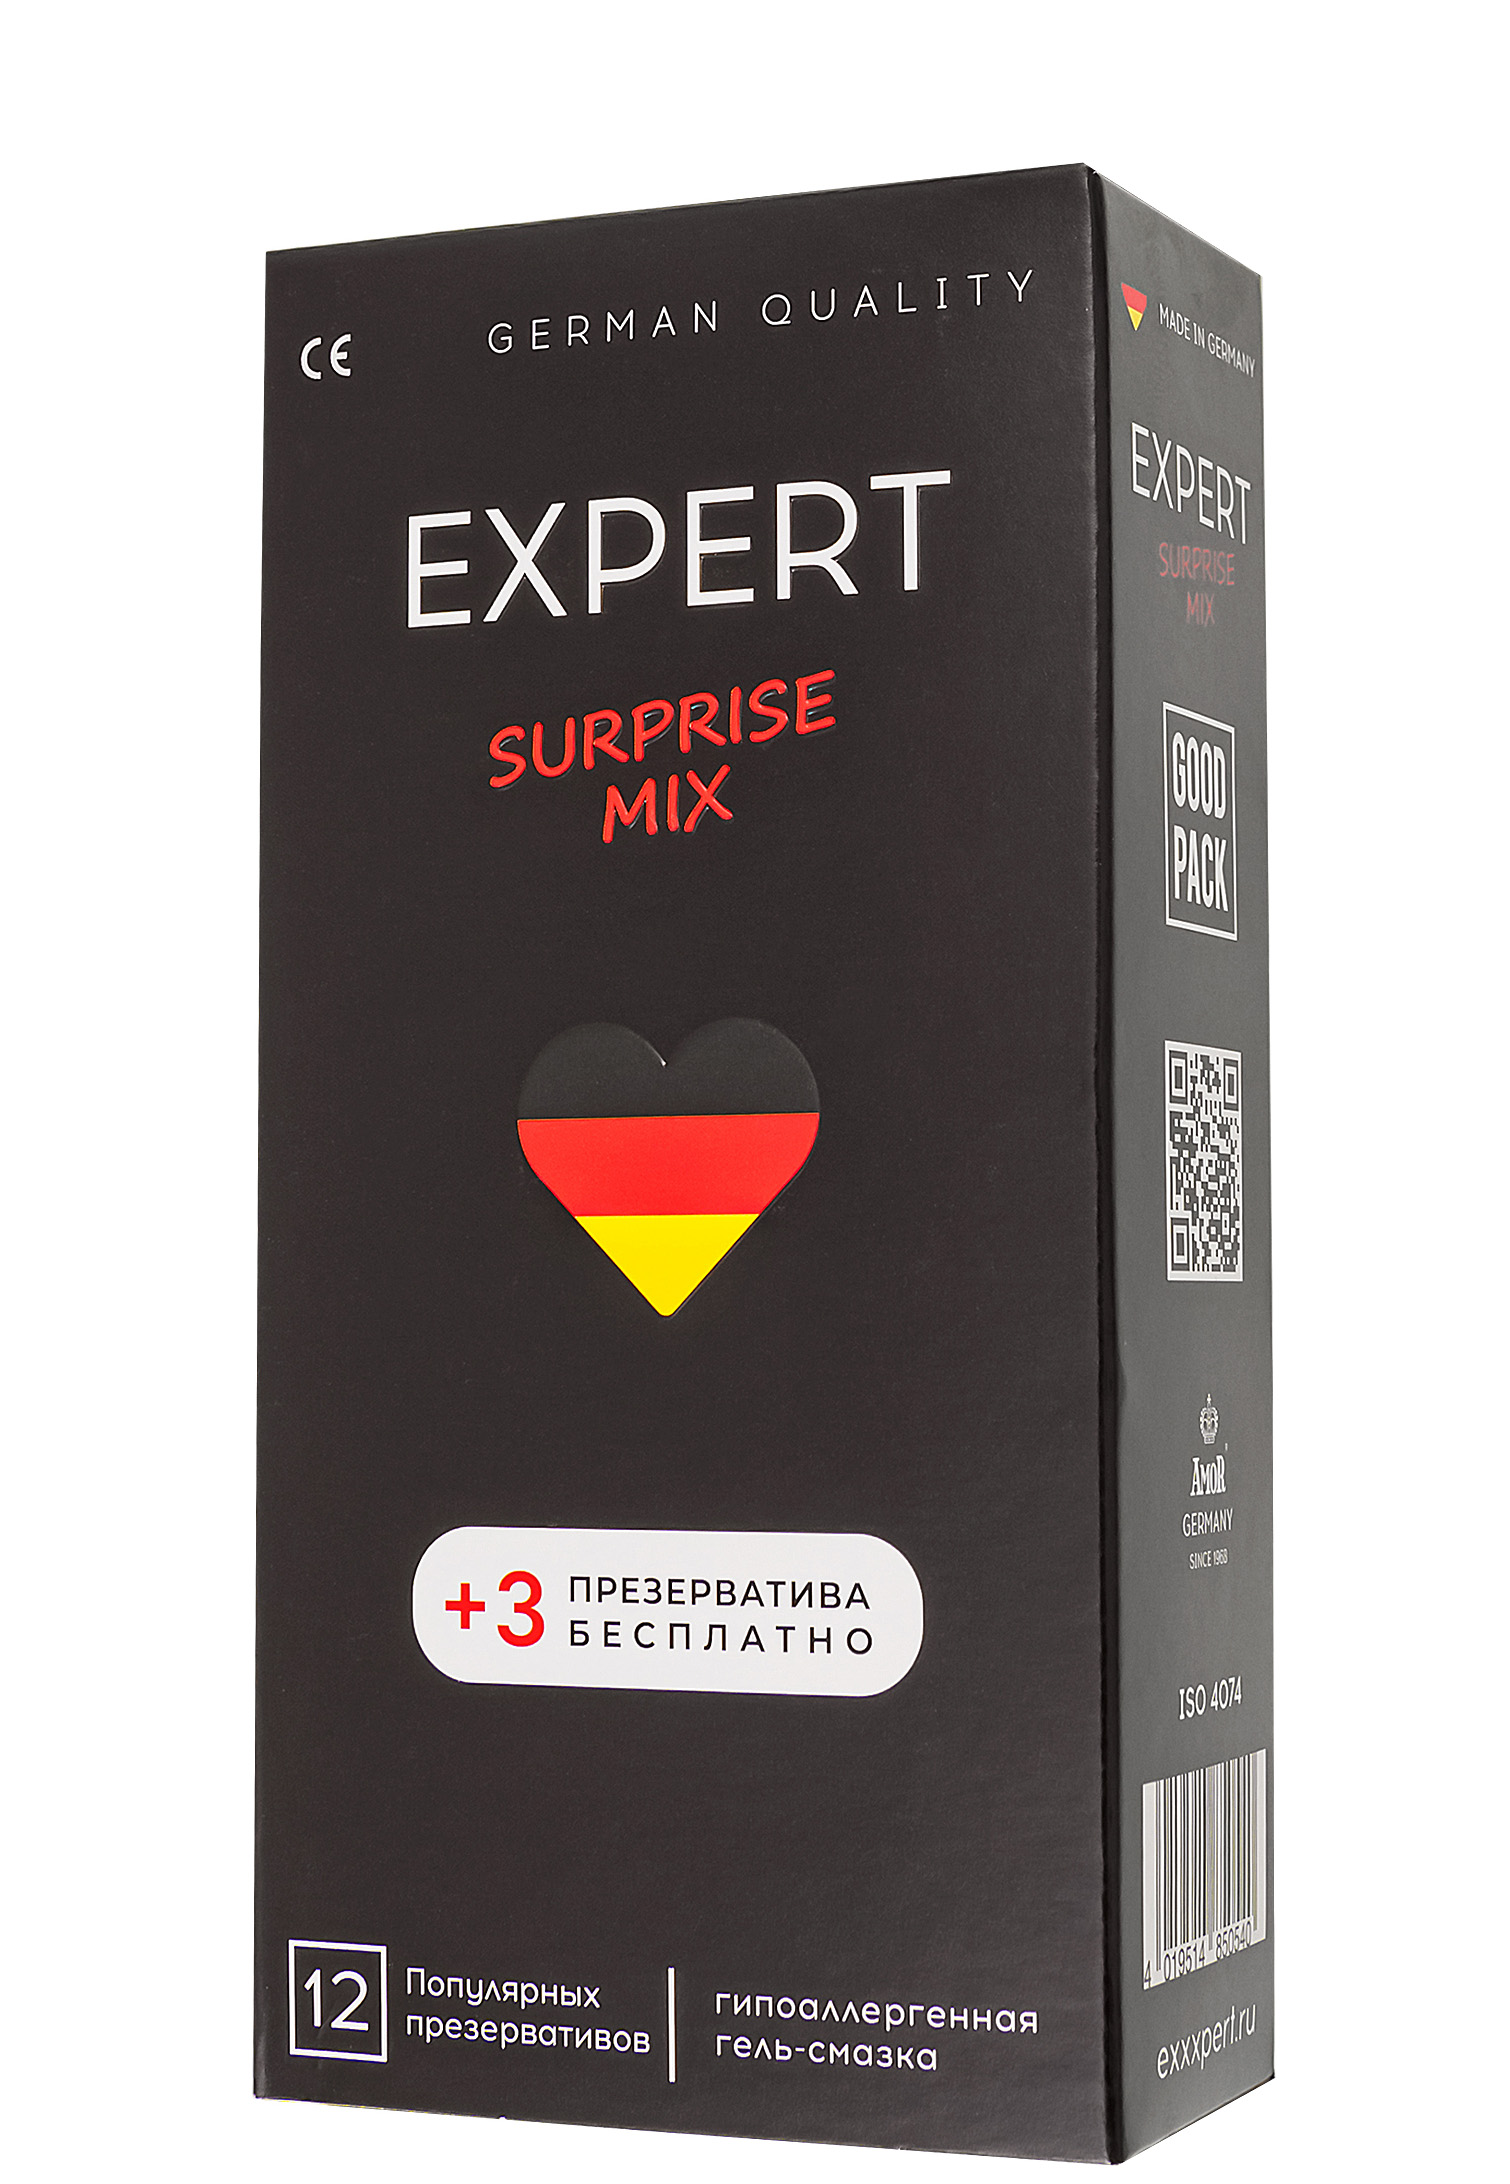 Презервативы Amor Expert Surprise Mix, 12 шт + 3 шт